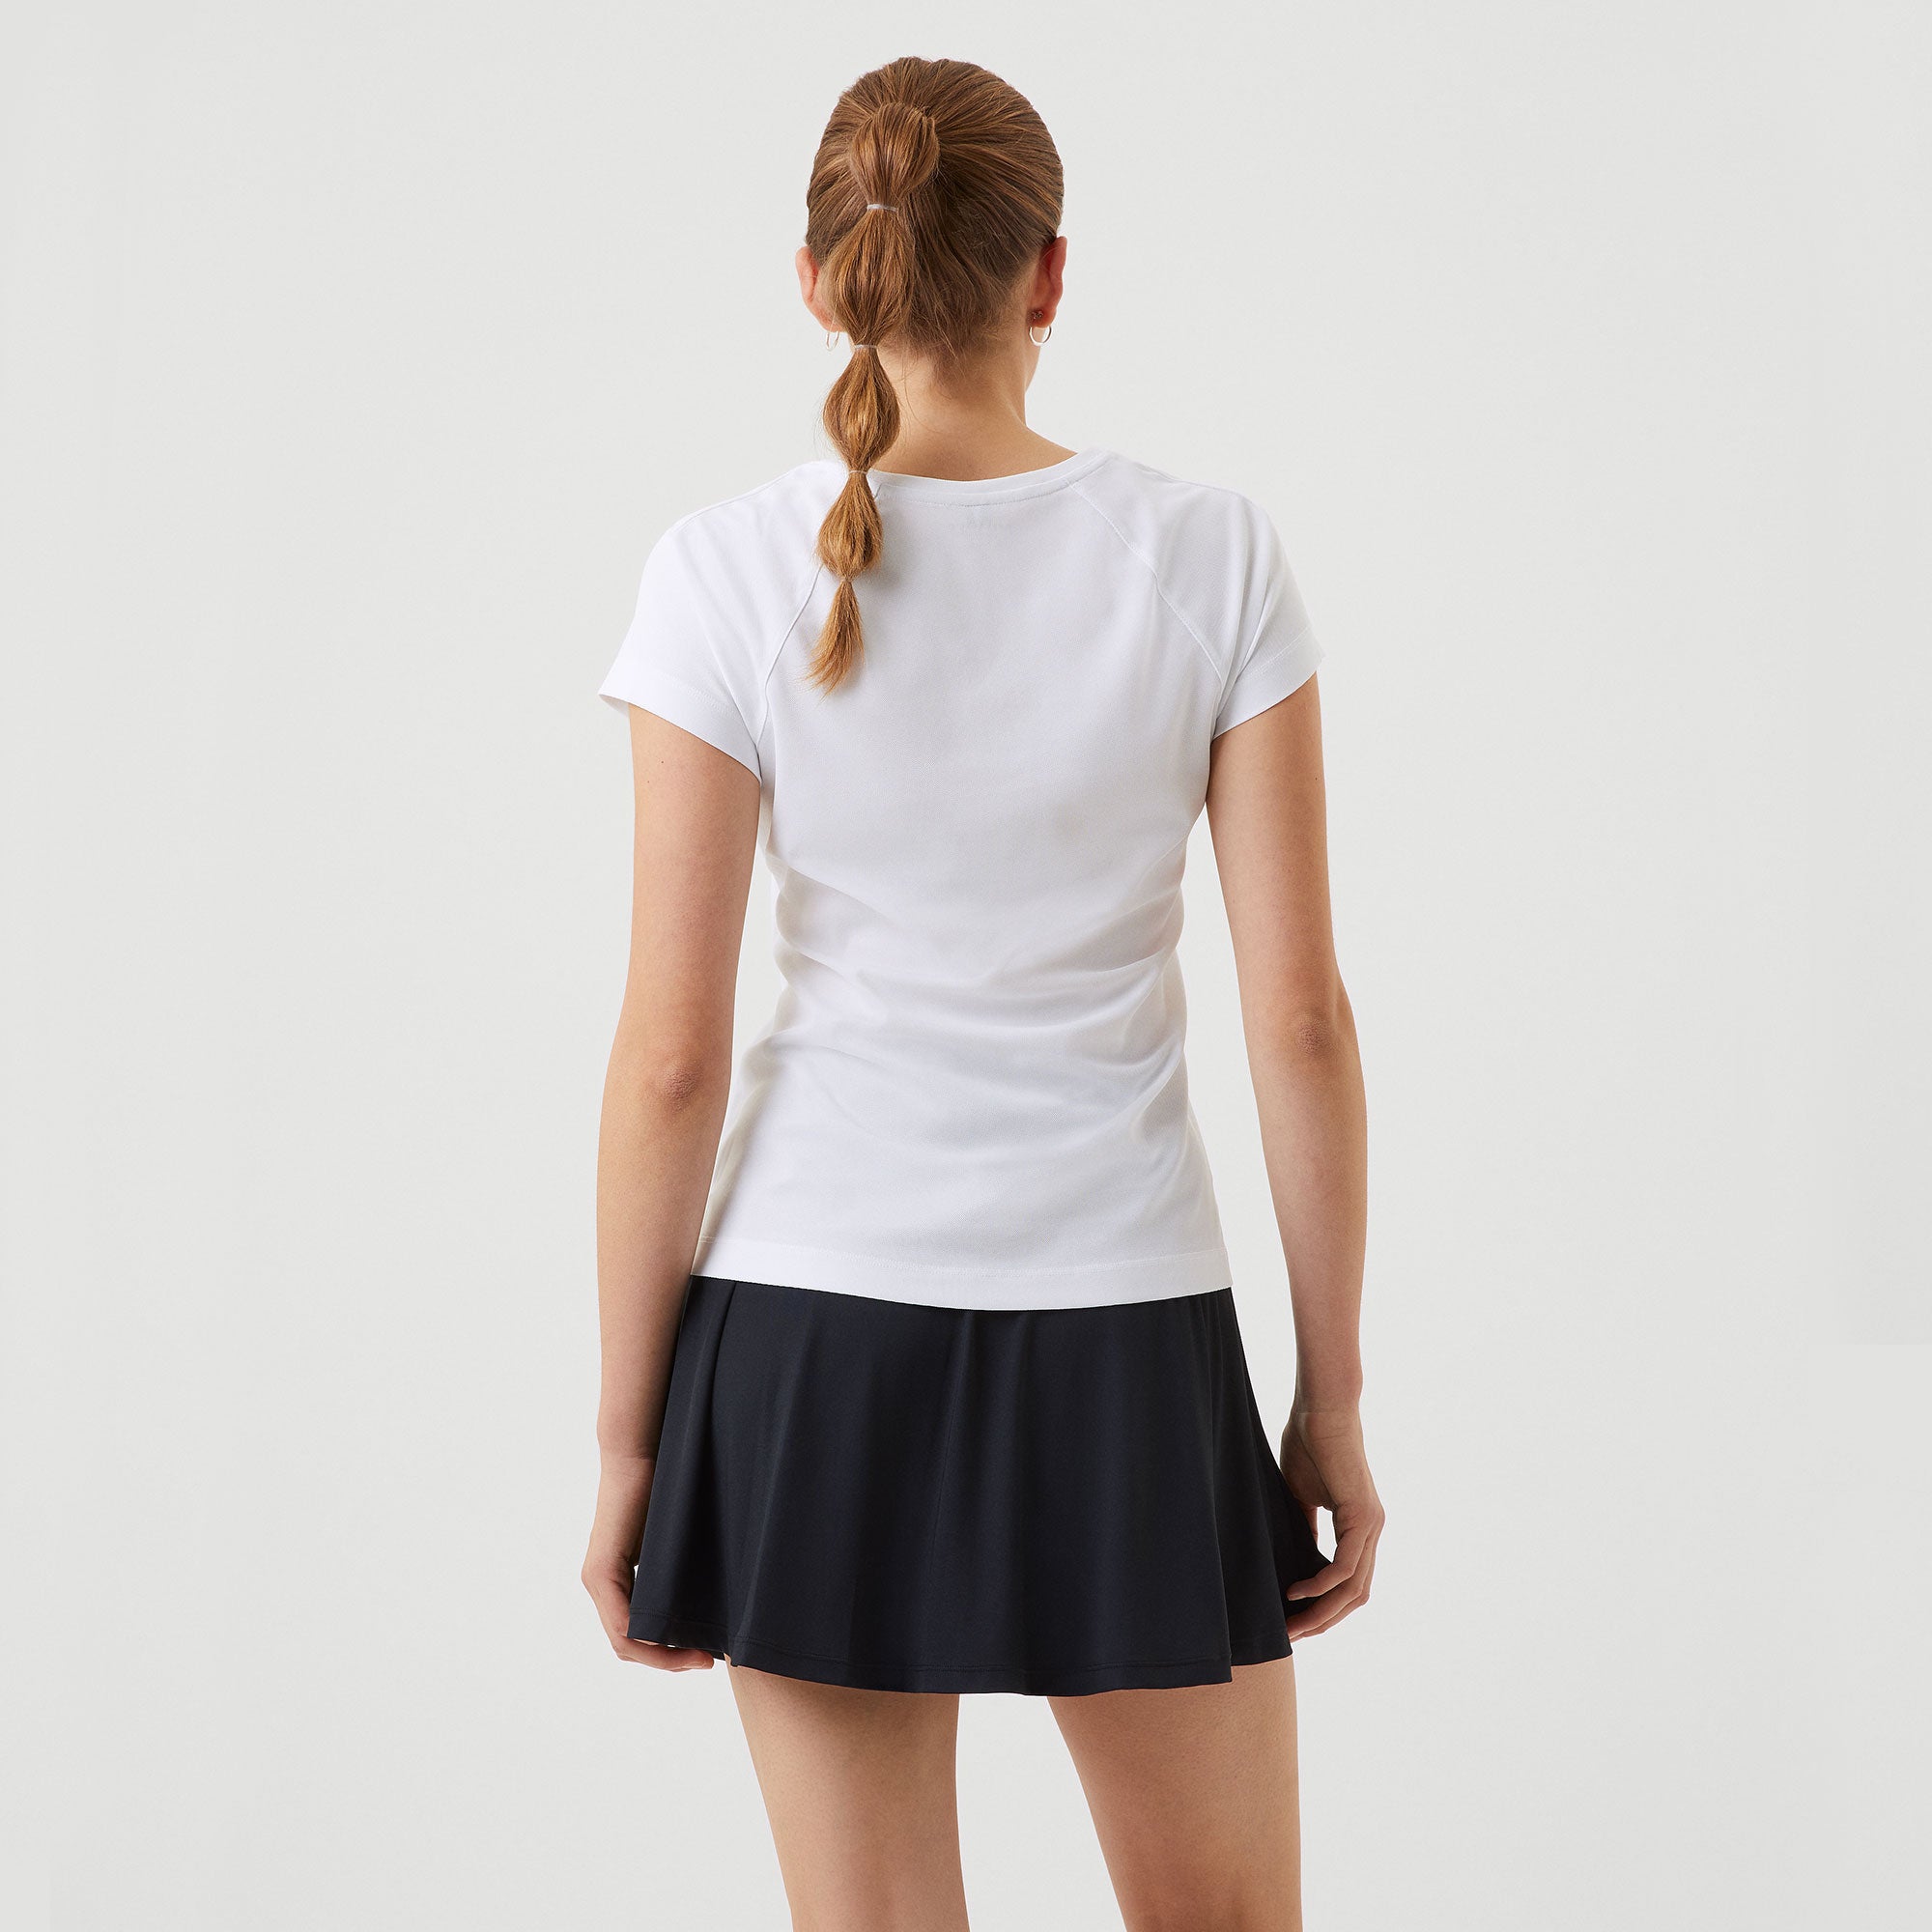 Björn Borg Ace Women's Tennis Shirt - White (2)